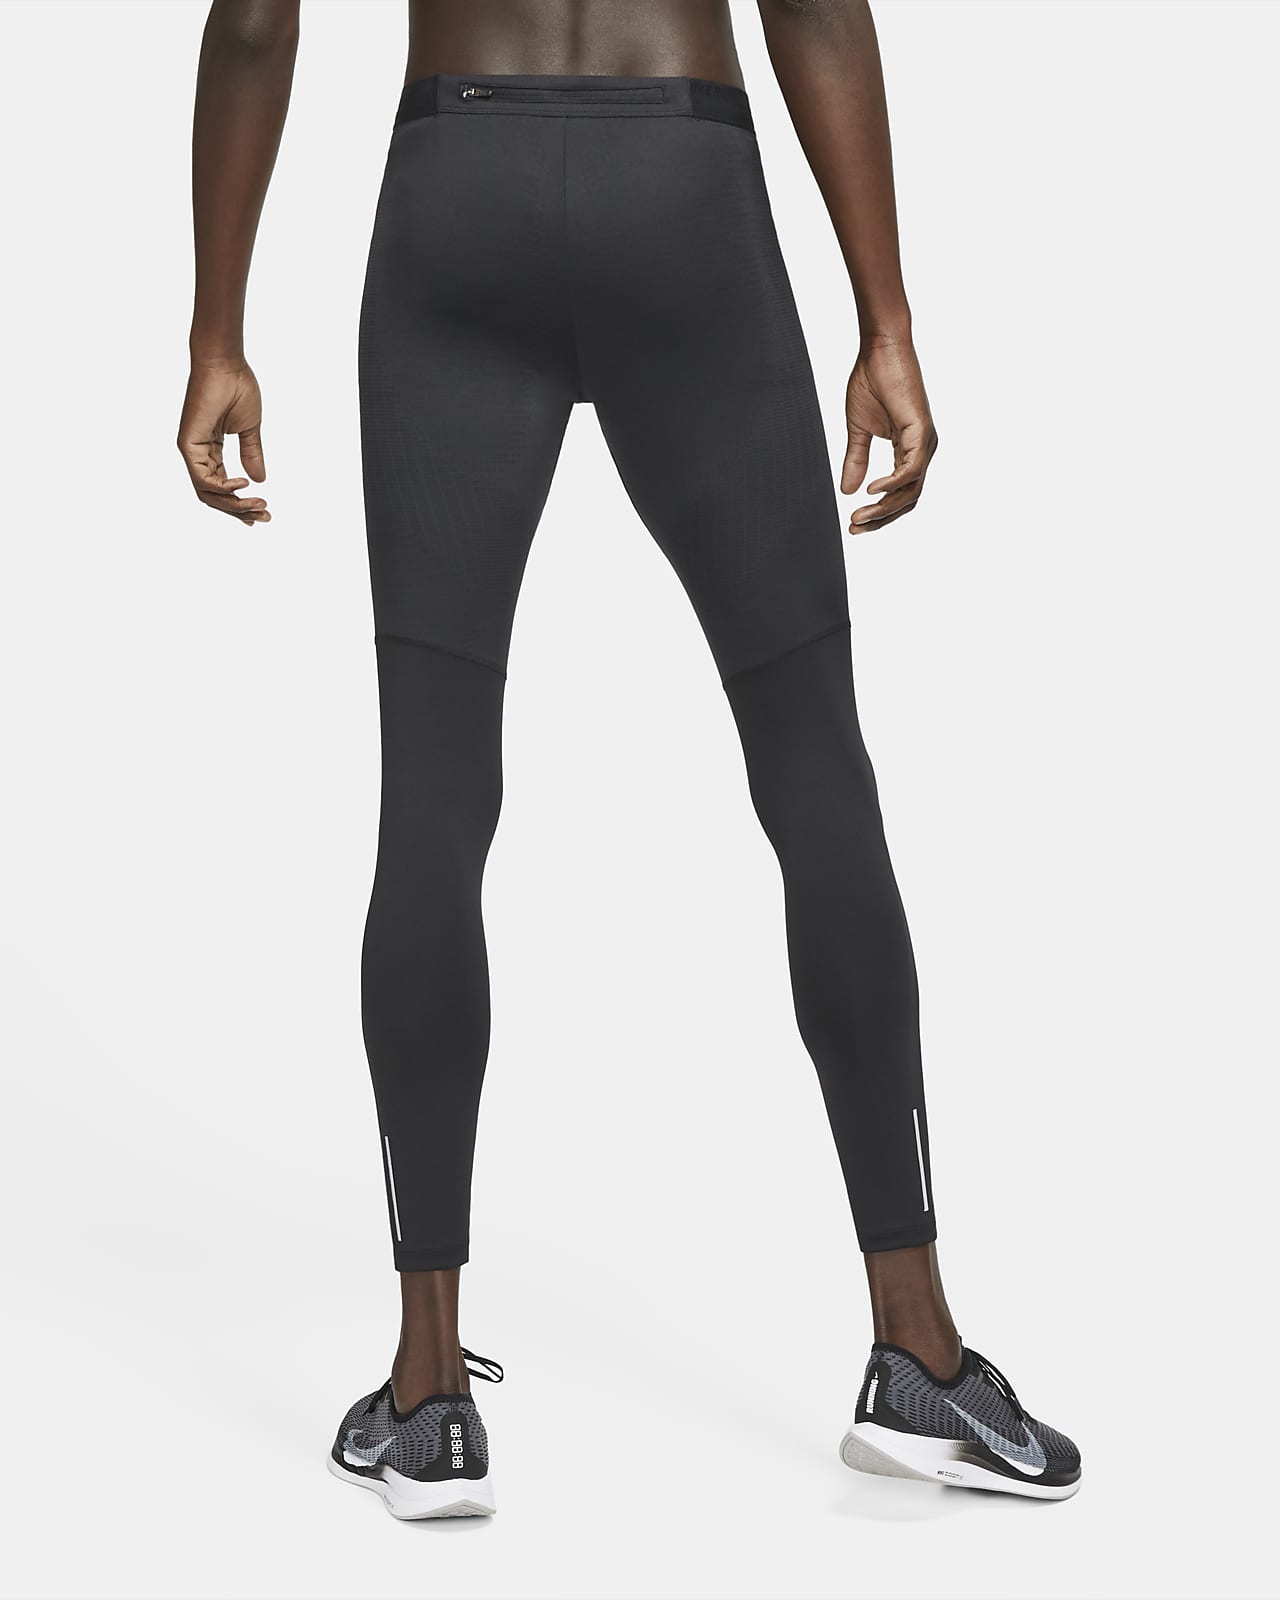 Nike Men's Half Running Tights Polyester/Spandex Blend Power Race